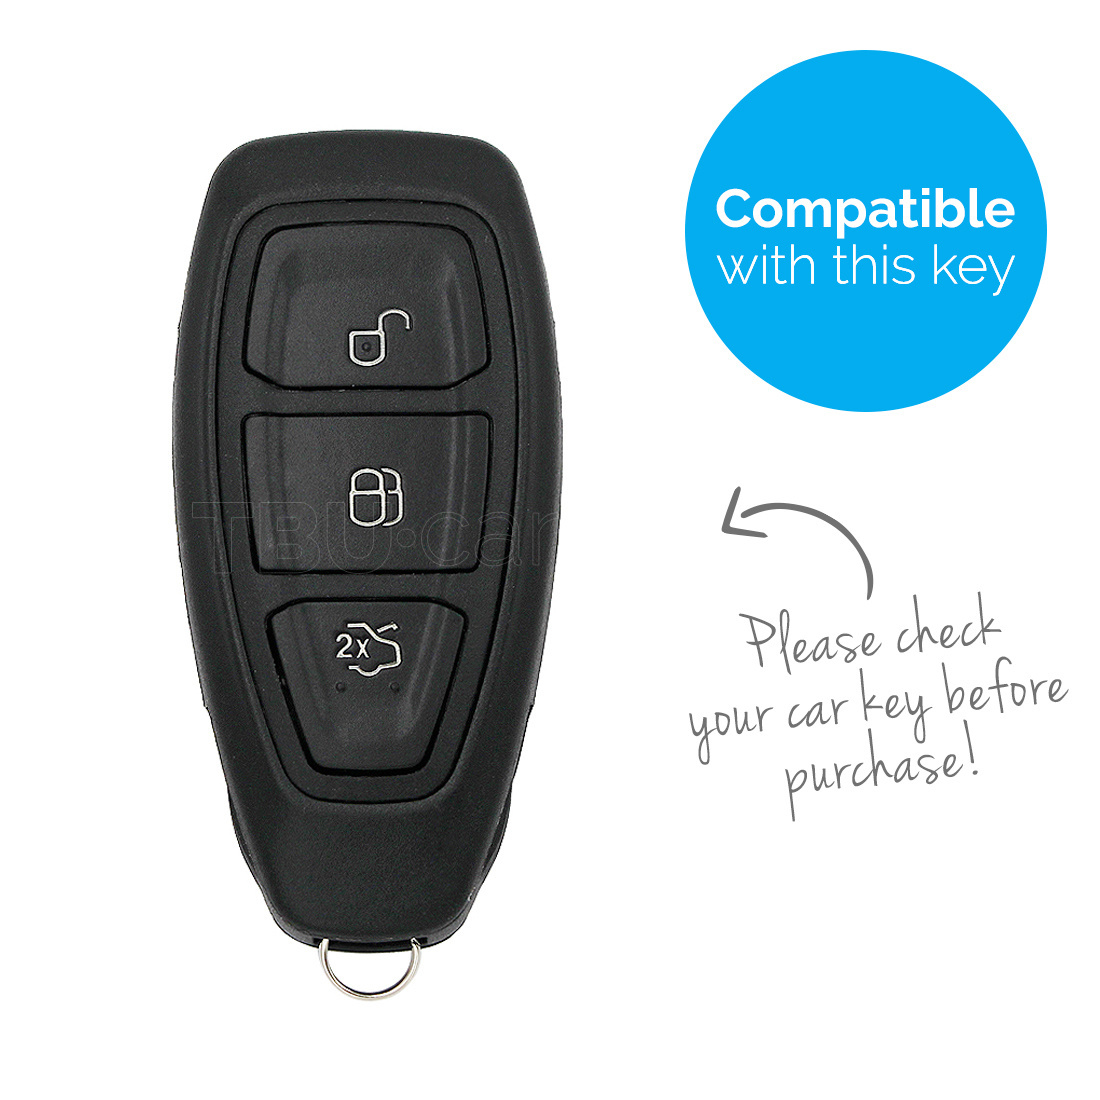 TBU car TBU car Autoschlüssel Hülle kompatibel mit Ford 3 Tasten (Keyless Entry) - Schutzhülle aus TPU - Auto Schlüsselhülle Cover in Roségold